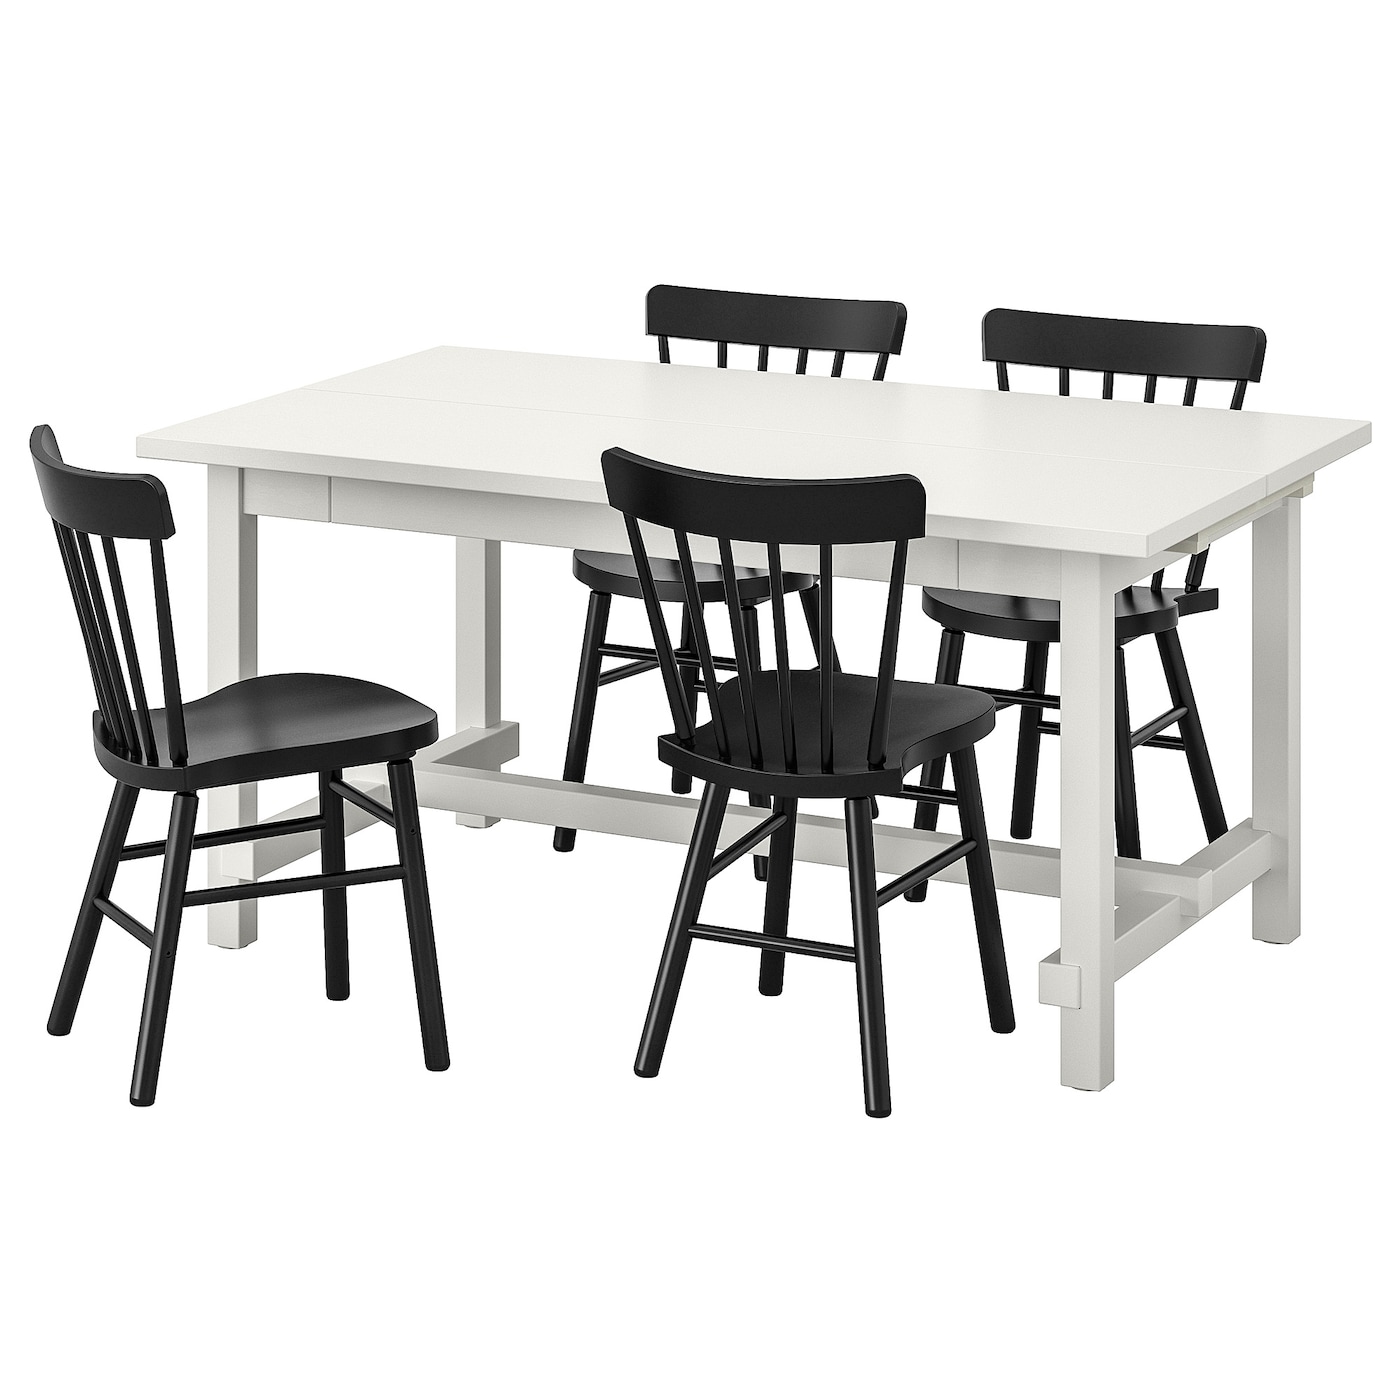 Стол и 4 стула - NORDVIKEN / NORRARYD IKEA/ НОРДВИКЕН/НОРРАРИД ИКЕА, 223/152х95 см, белый/черный